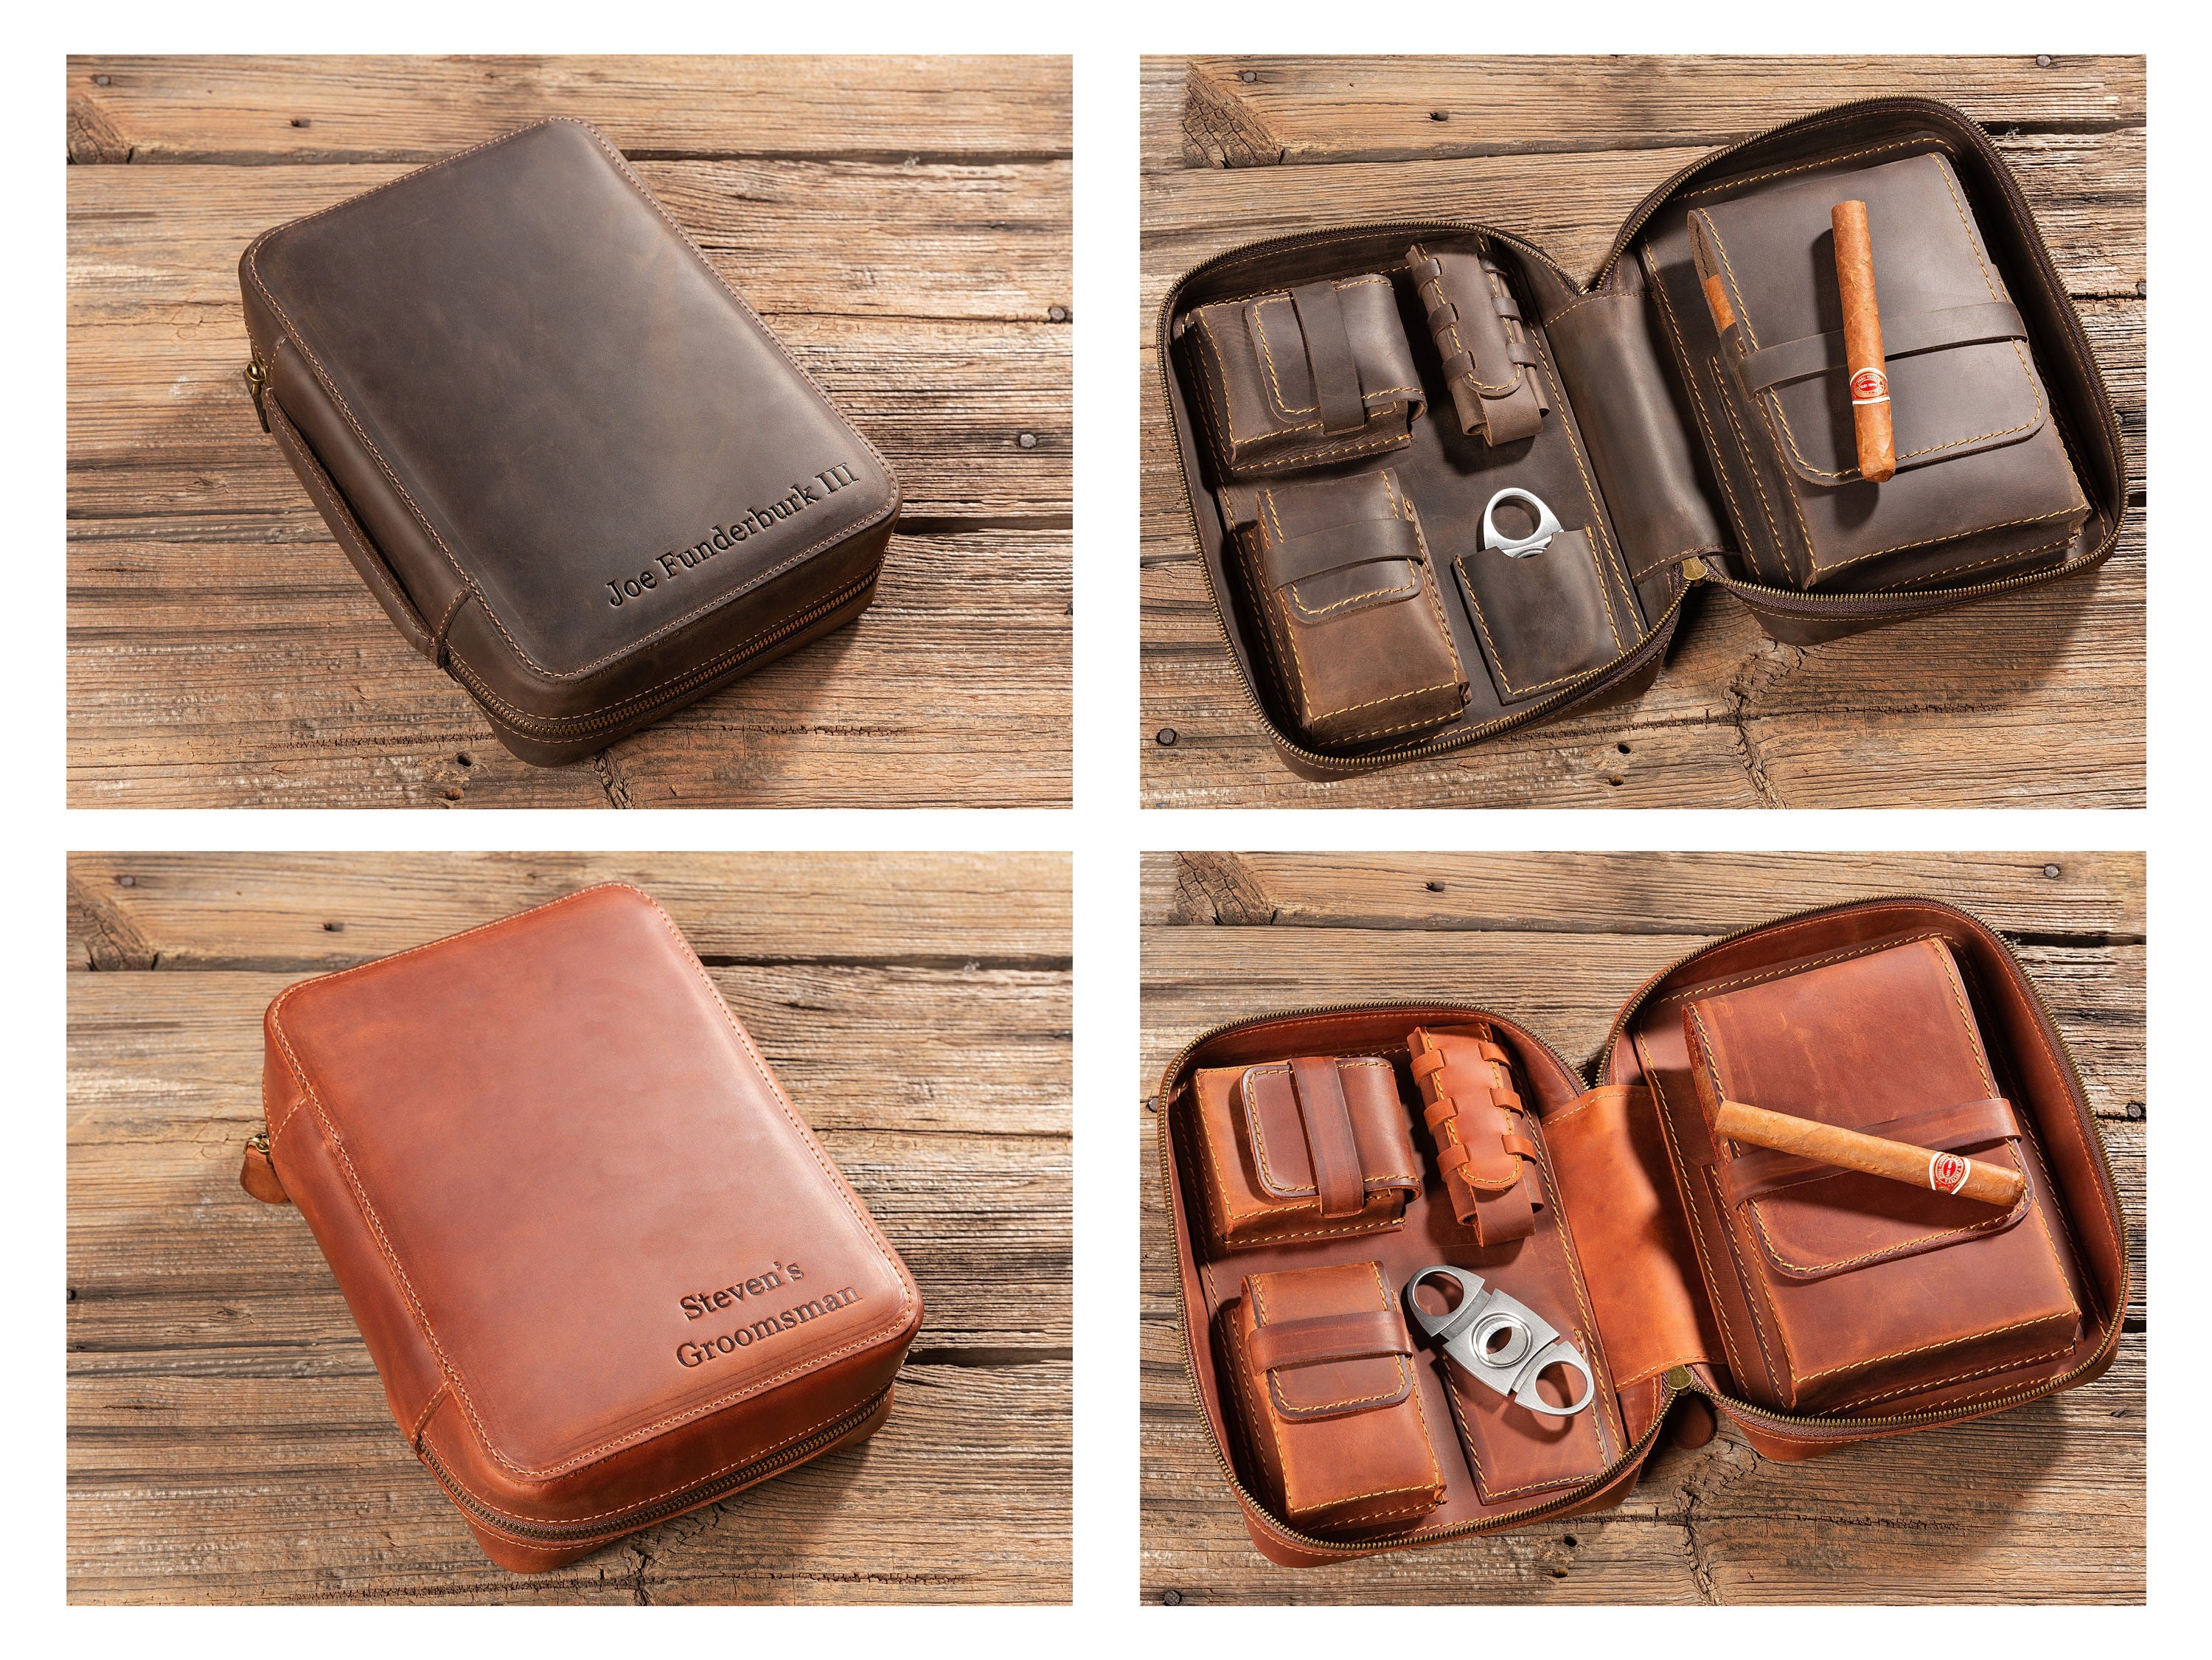 Adorini Leather Cigar Case - Black Stitching